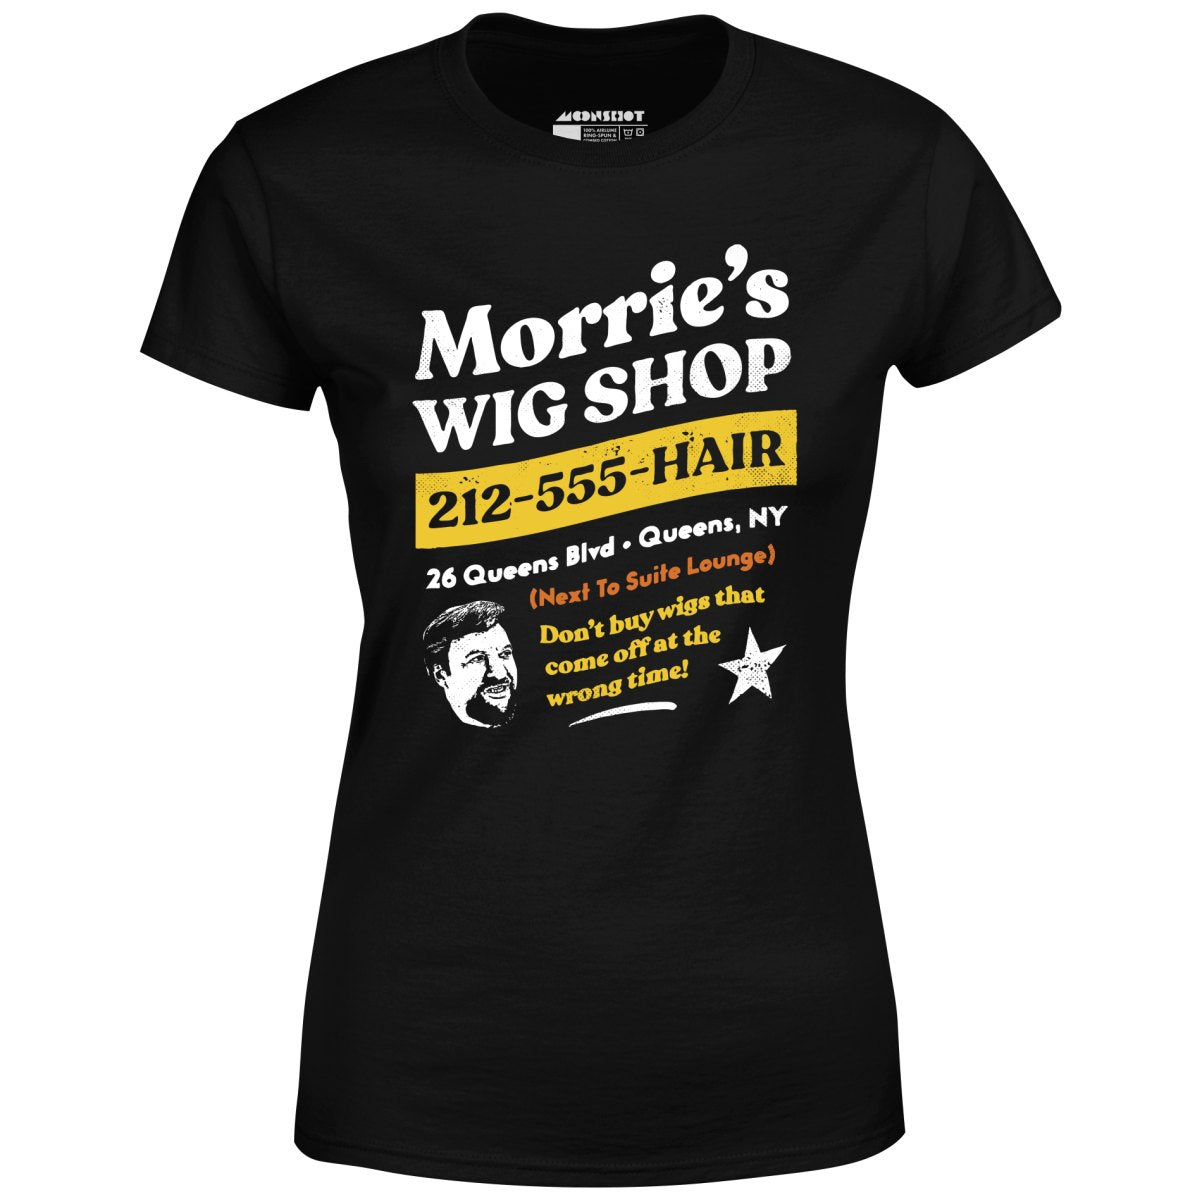 Morrie's Wig Shop - Women's T-Shirt